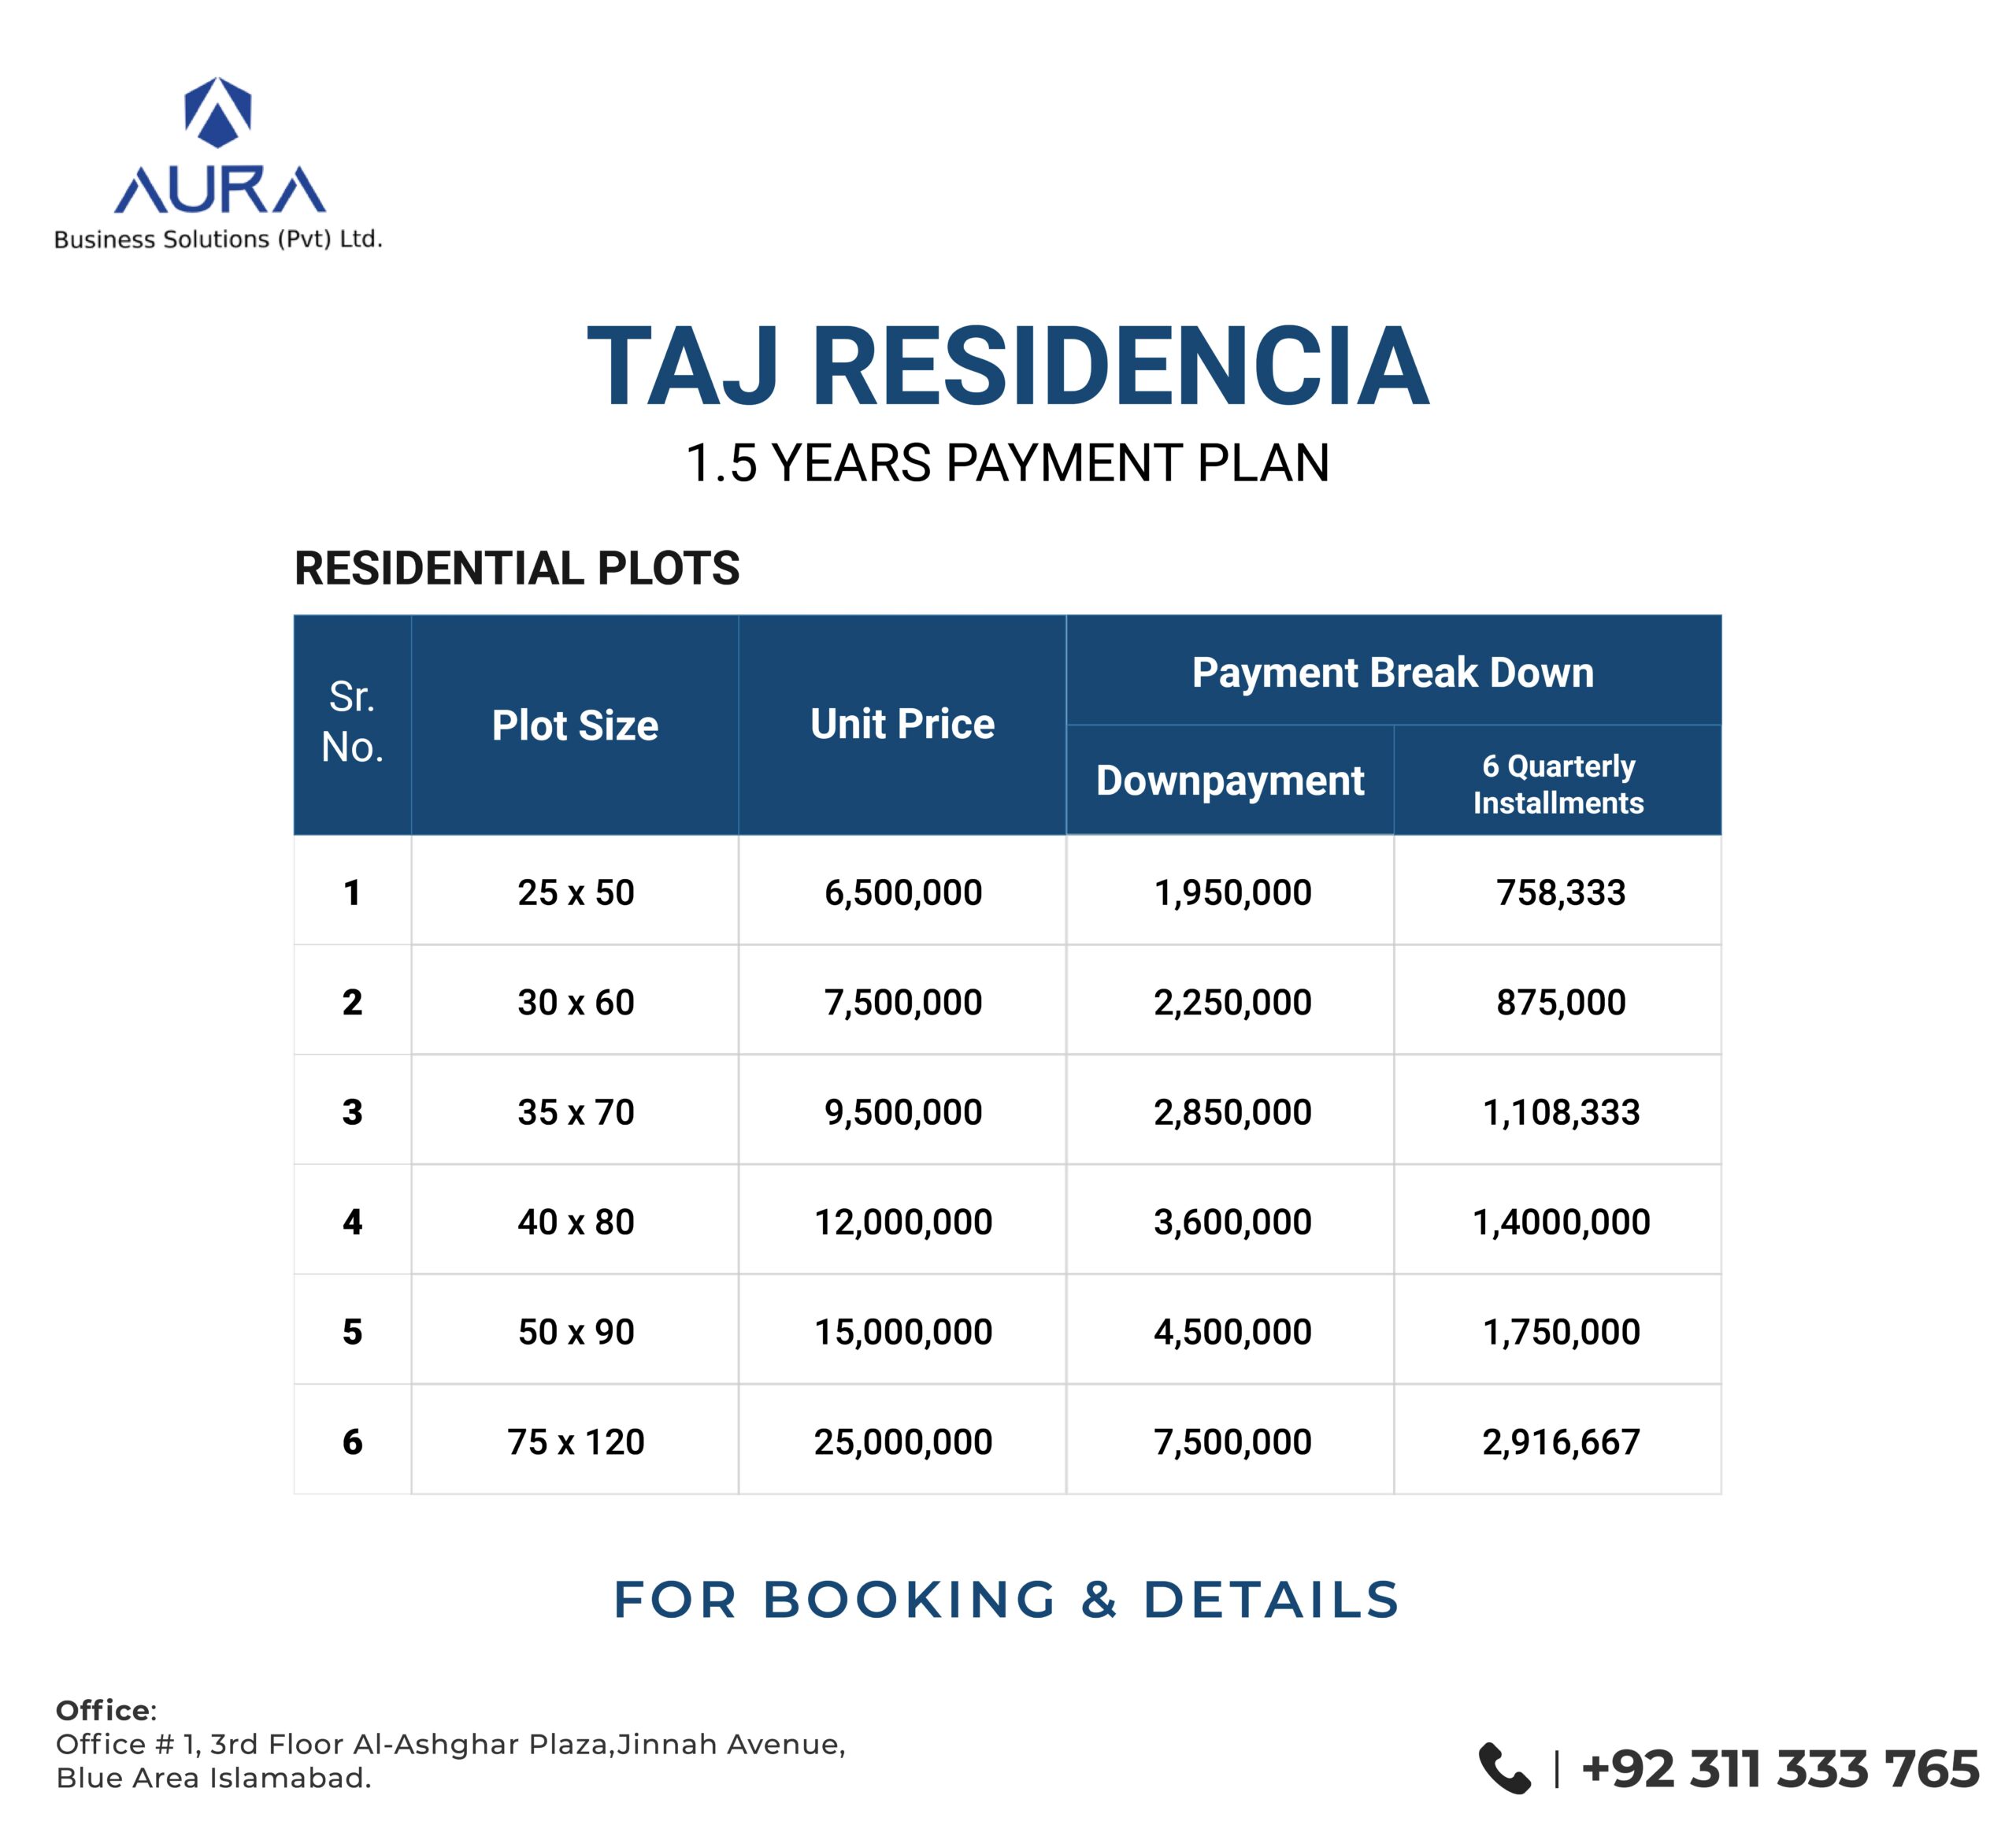 Taj Residencia Payment Plan 1.5 Years